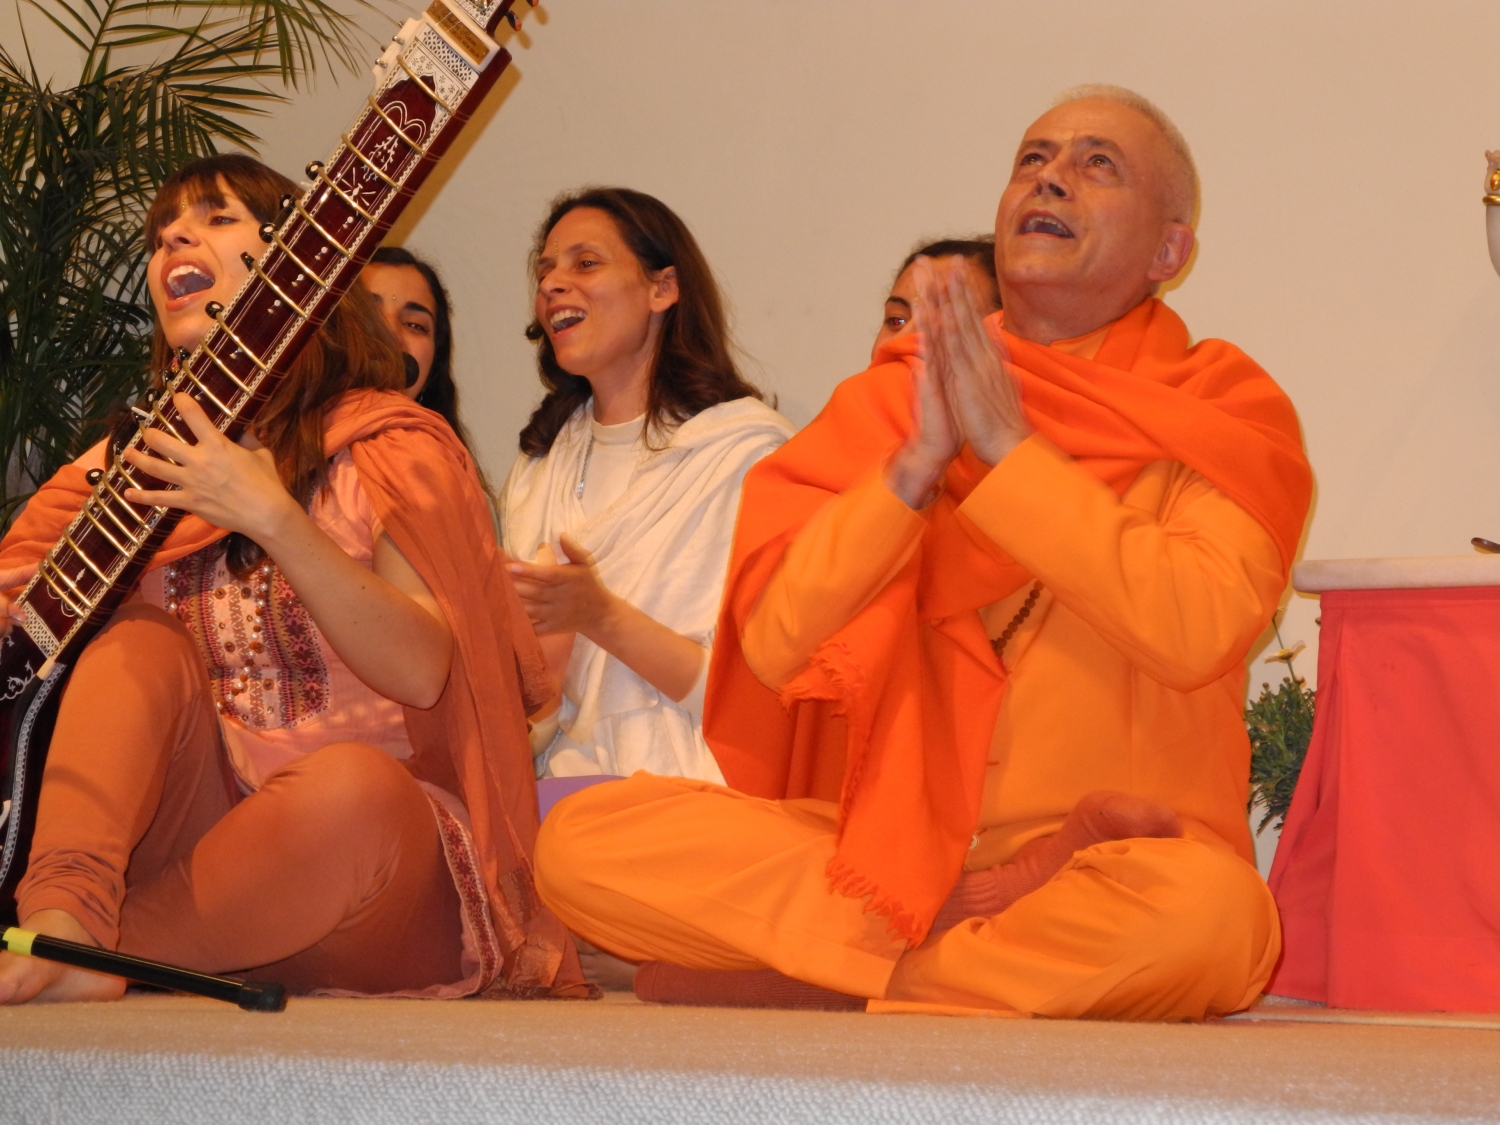 Encontro de H.H. Jagat Guru Amrta Sūryānanda Mahā Rāja com o Mestre Sukadev Bretz - Yoga Vidya, Bad Meinberg, Alemanha - 2012, Março